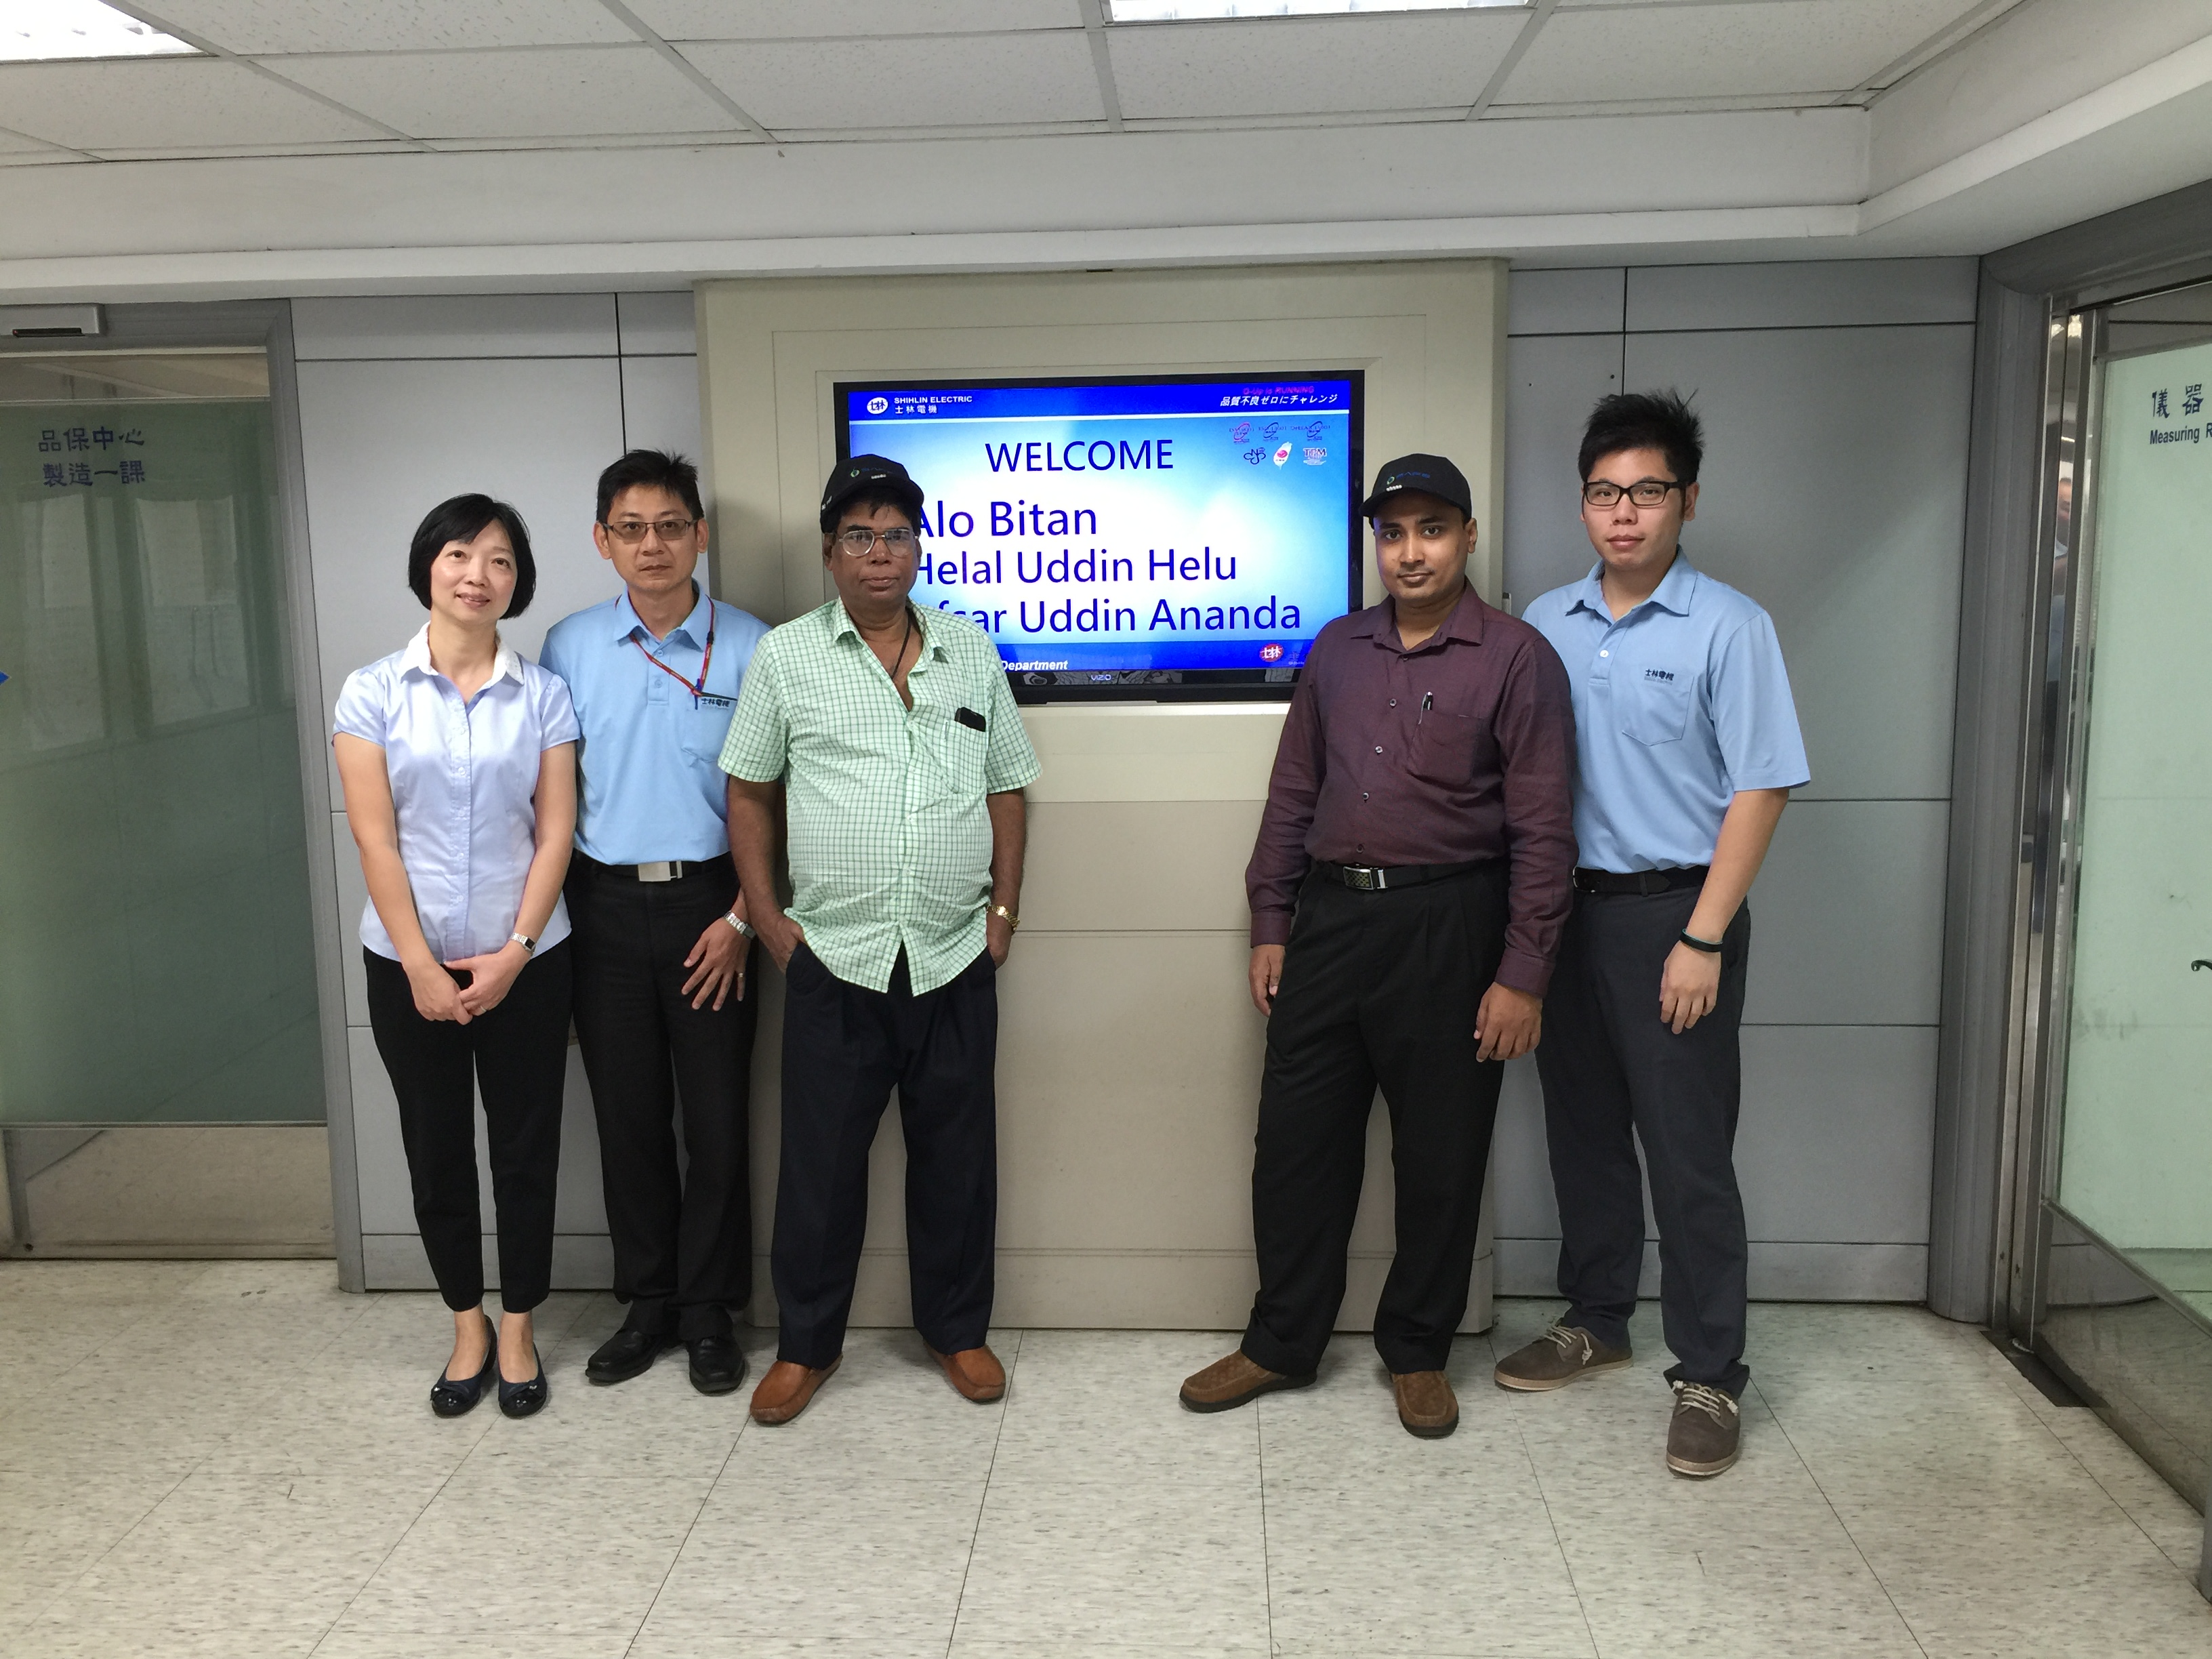 Bangladesh customers visit Shihlin Electric